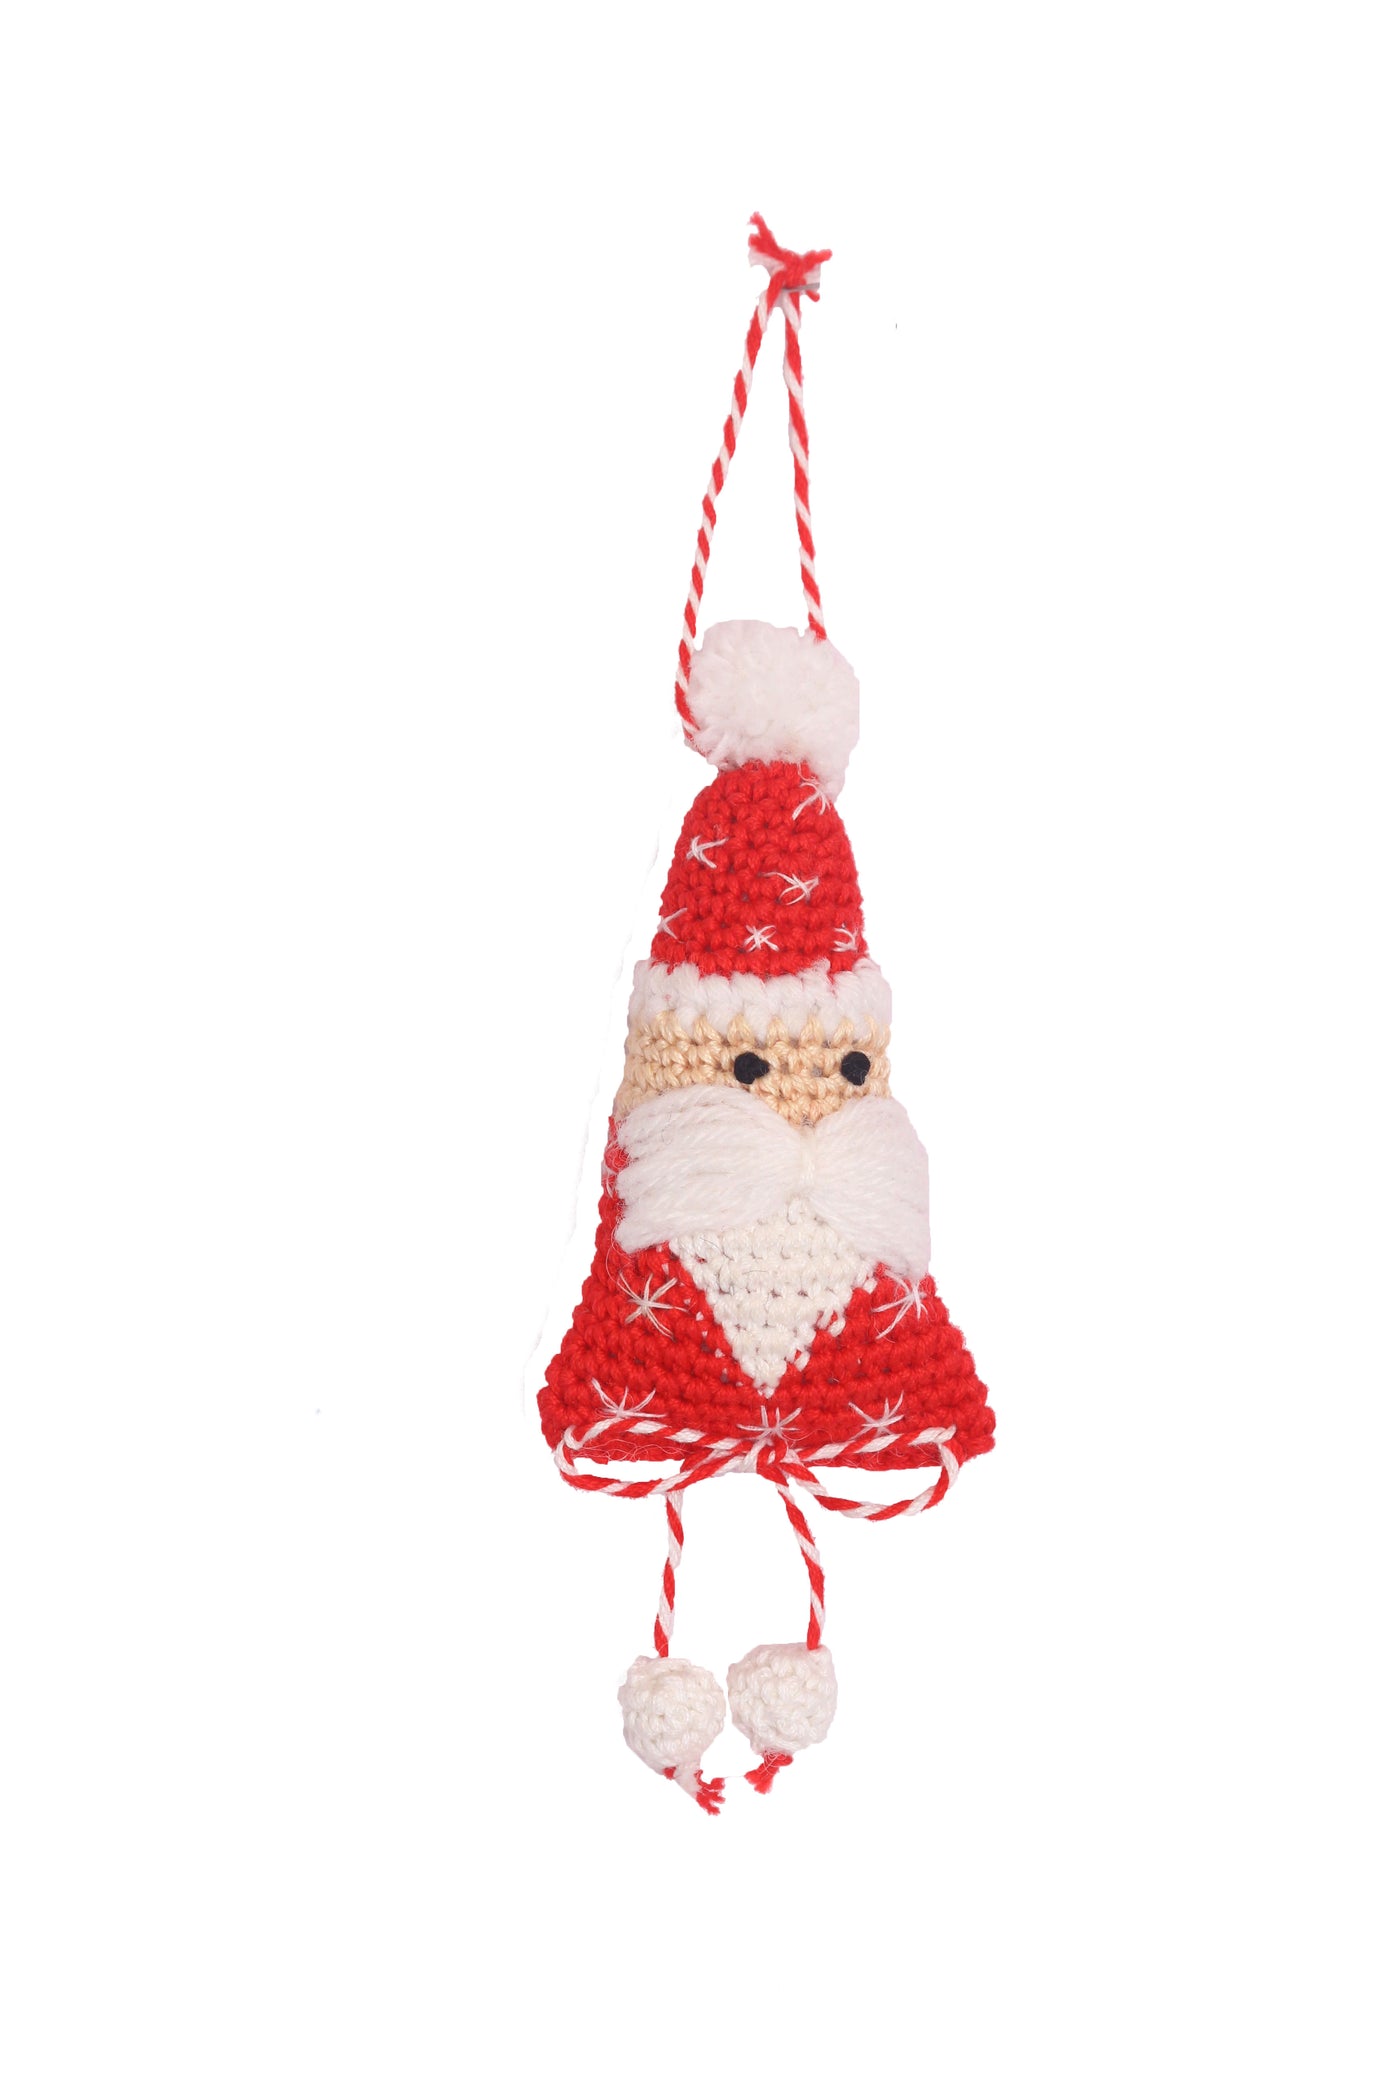 Handcrafted Amigurumi Christmas Tree Ornament-
Santa